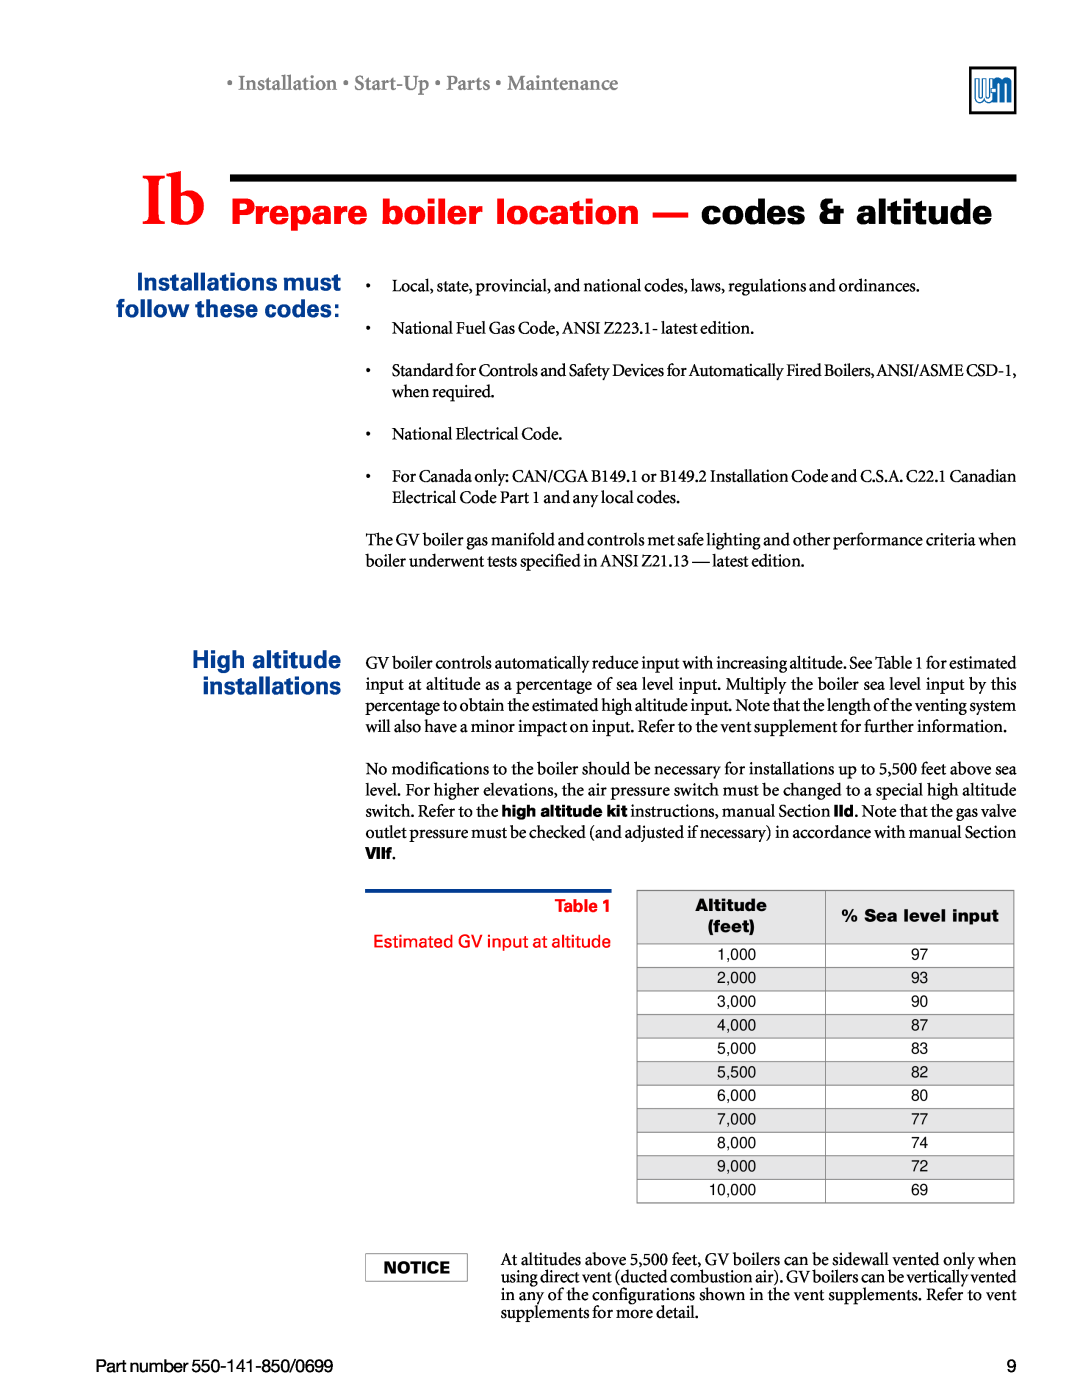 Weil-McLain 550-141-850/0599 Ib Prepare boiler location - codes & altitude, High altitude installations, Altitude, feet 